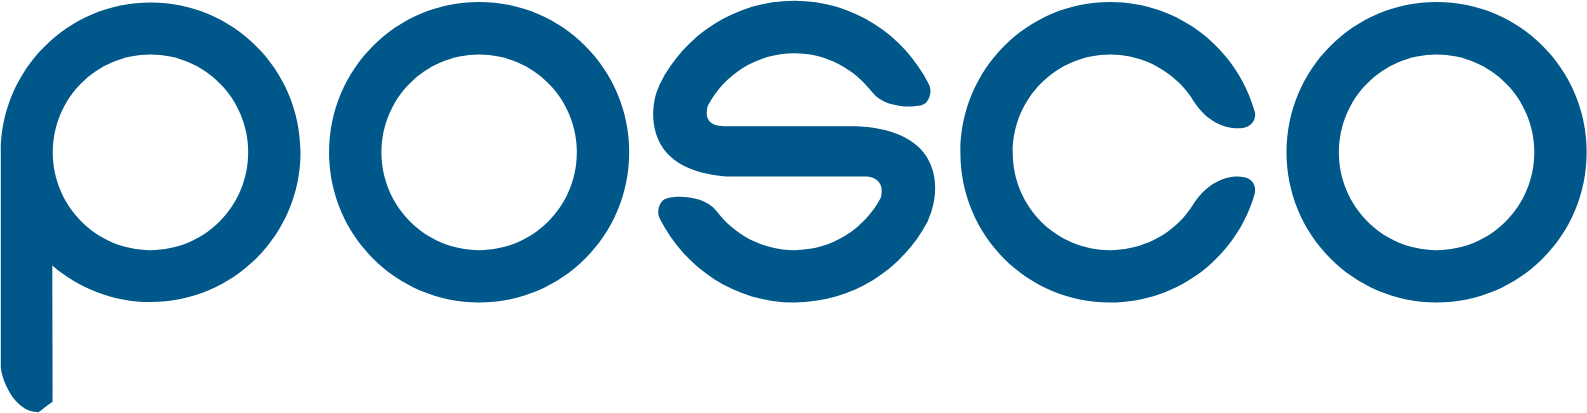 POSCO logo large (transparent PNG)